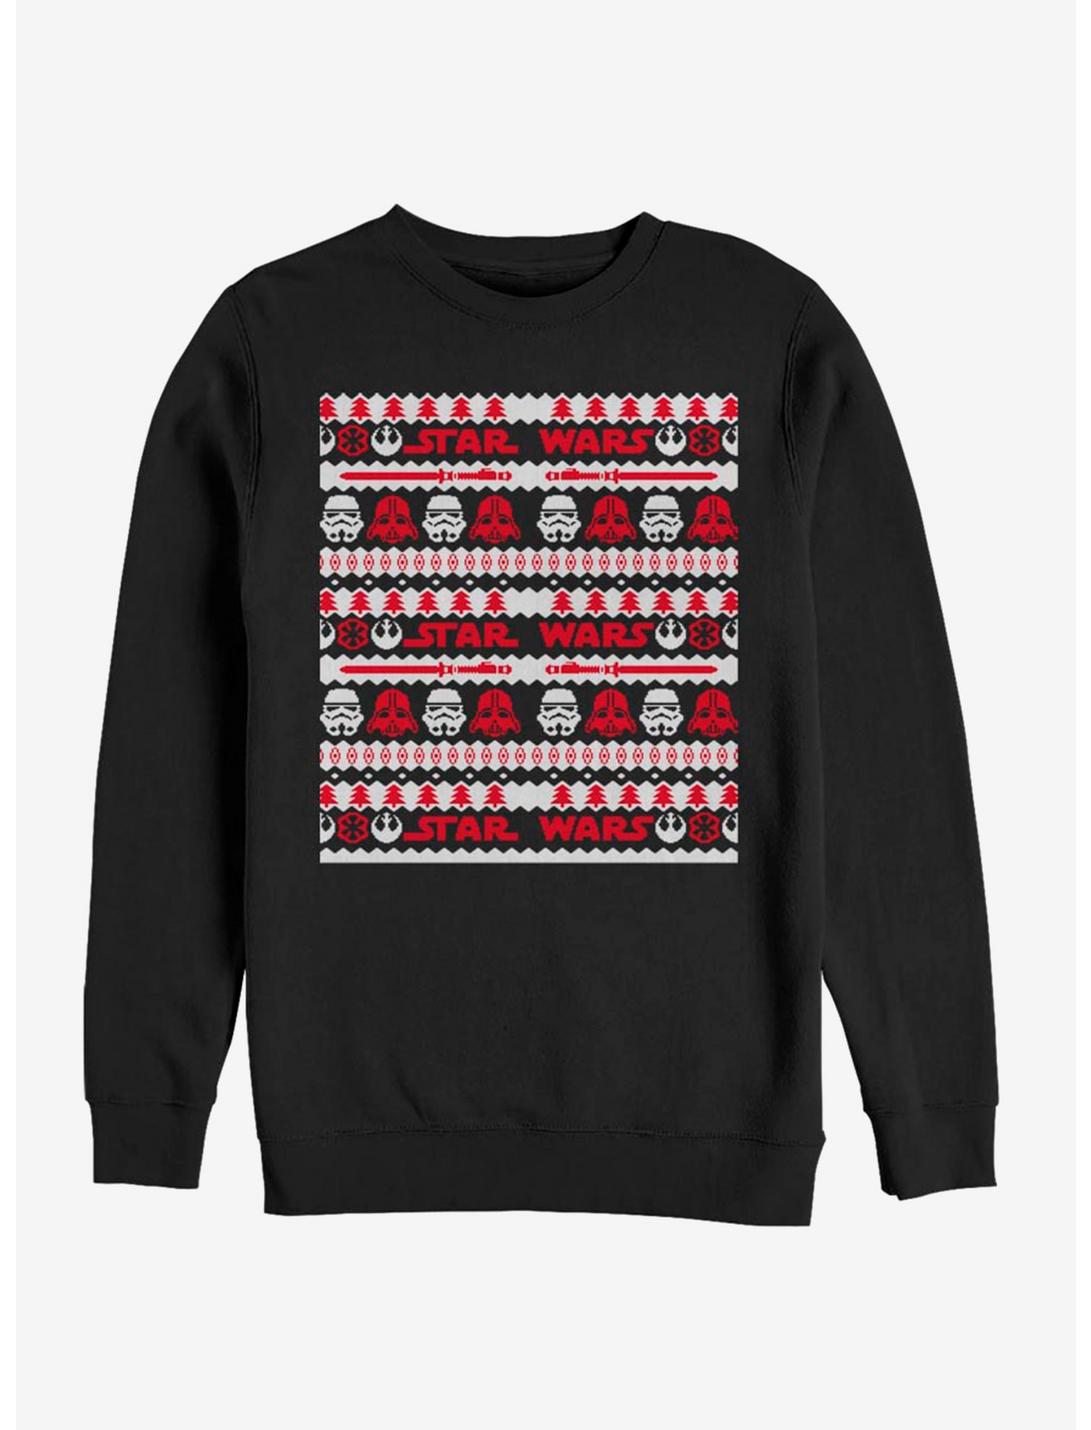 Star Wars Holiday Zags Simplified Sweatshirt, BLACK, hi-res